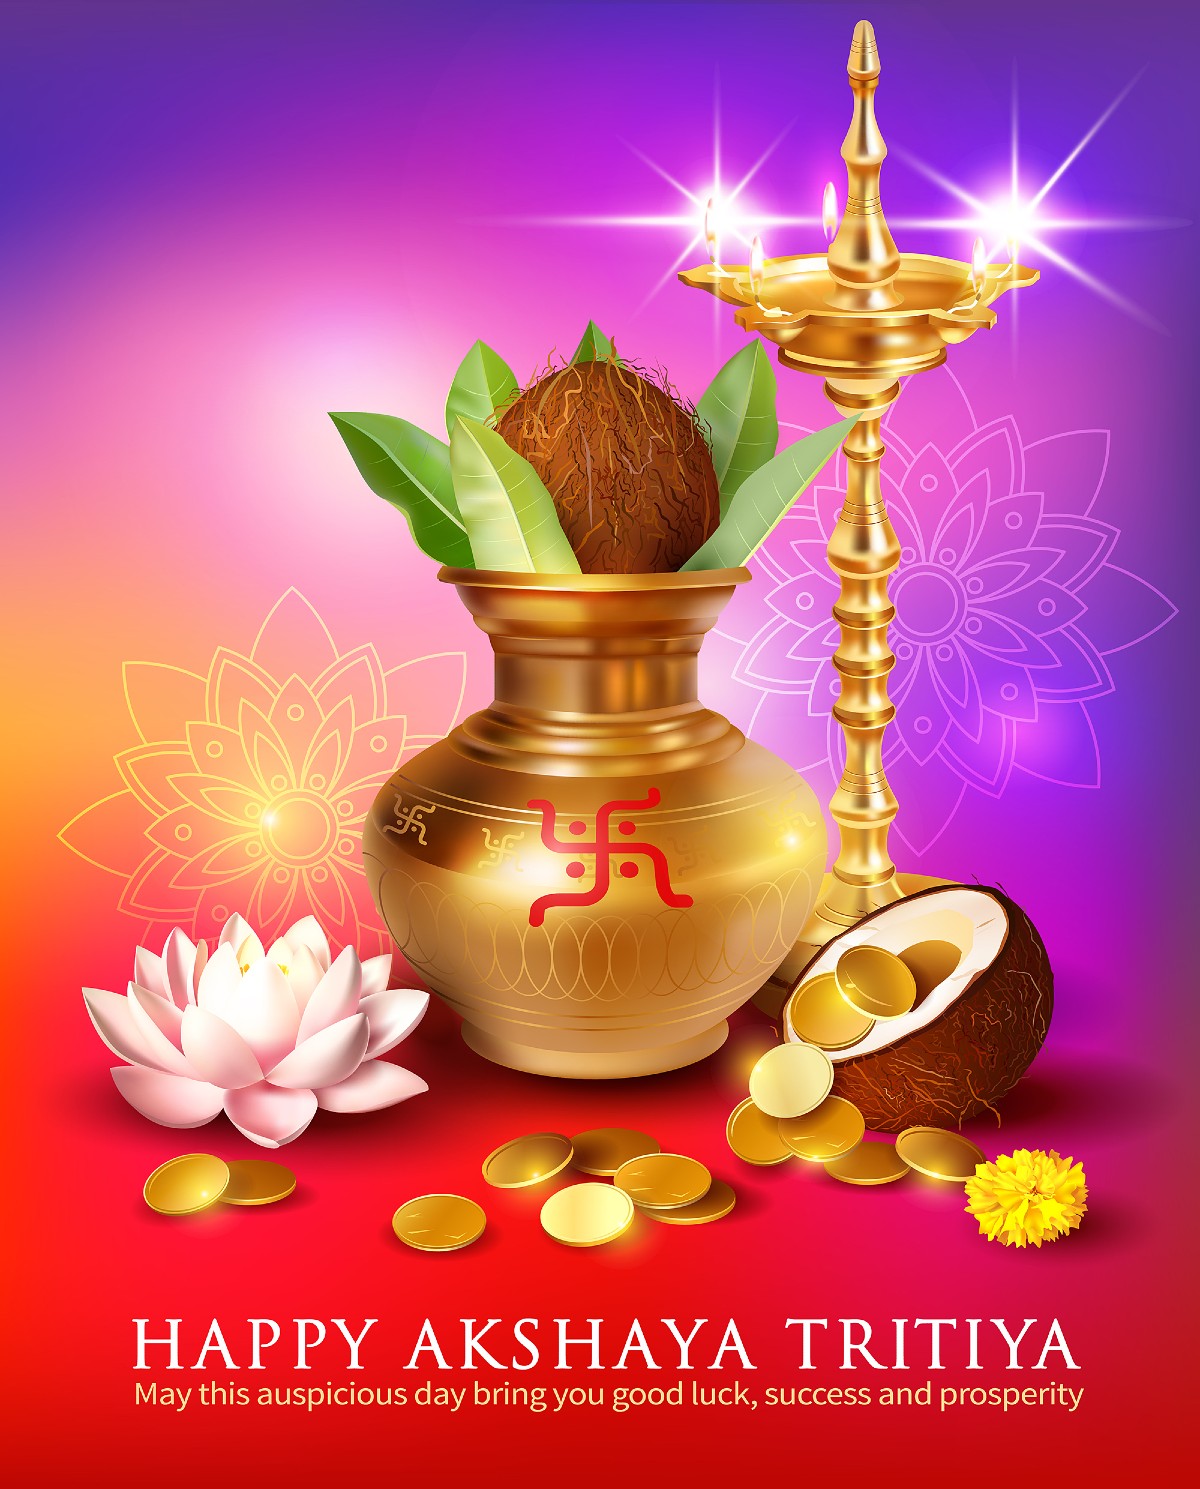 Happy Akshaya Tritiya 2022 Wishes, Images, Status, Quotes, Messages